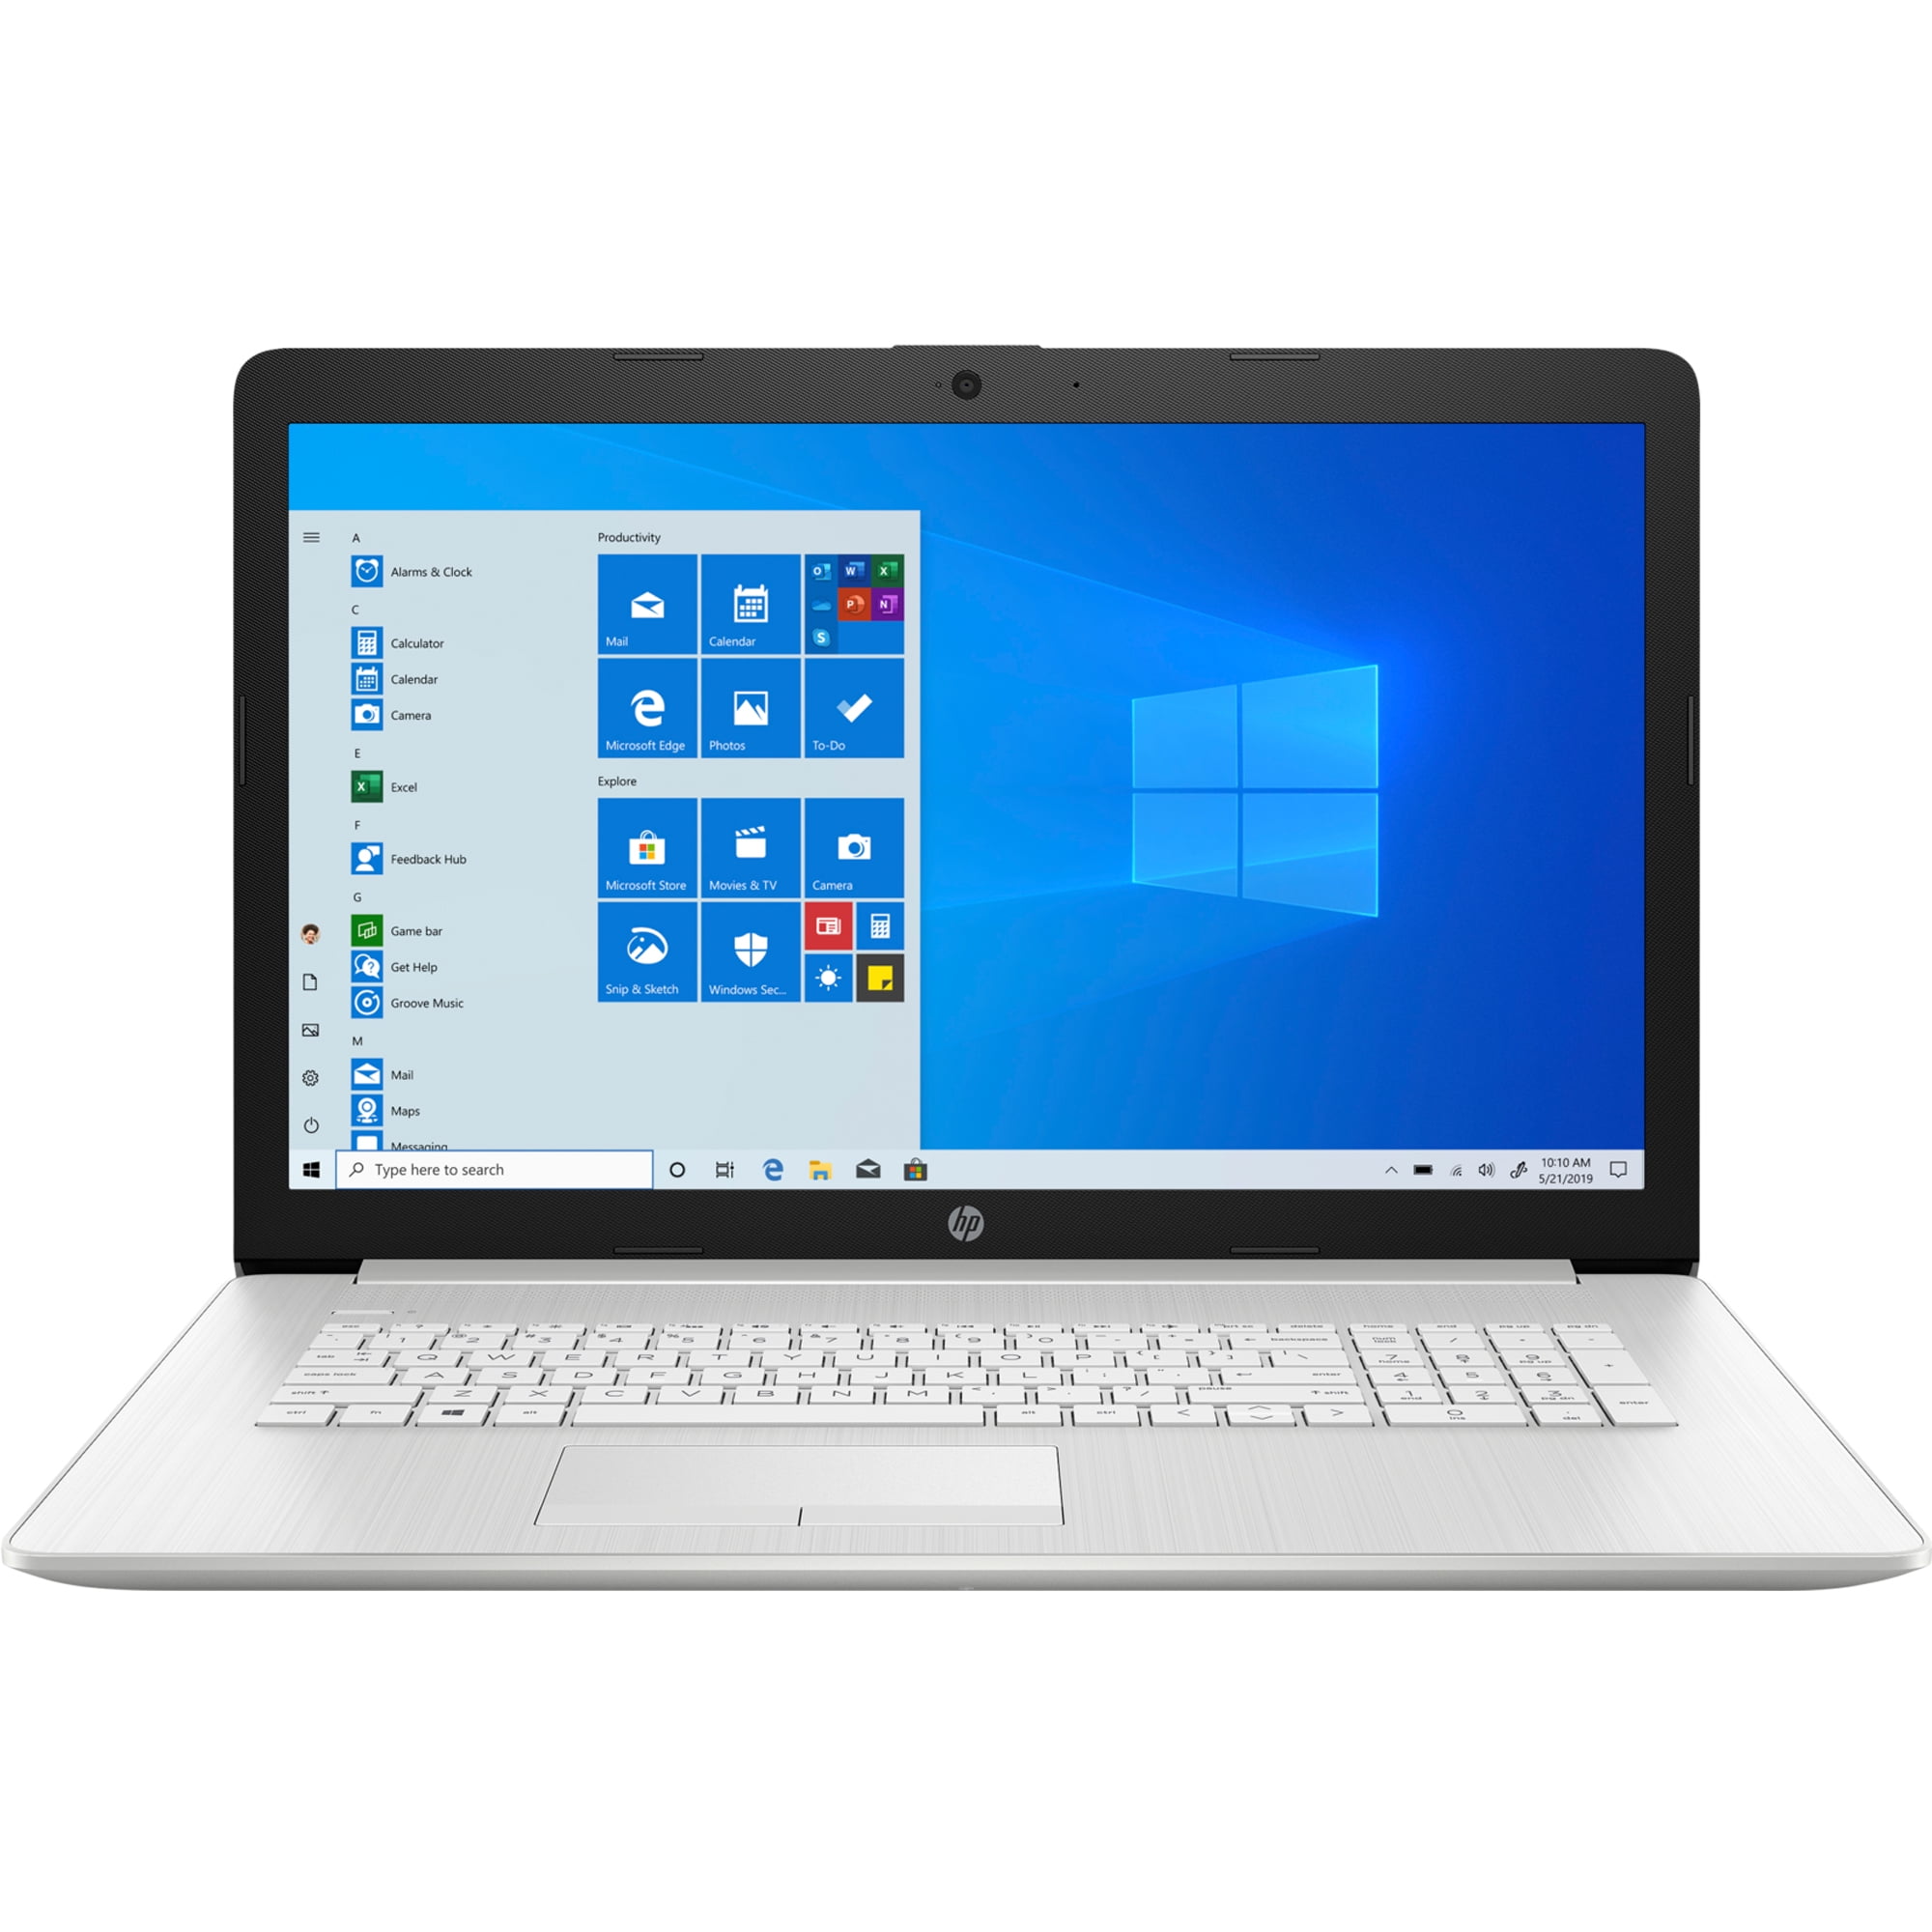 HP 17.3" HD+ Laptop, Intel i3-1125G4, 8 GB RAM, 512 GB SSD, DVD-Writer, Windows 10 Home 64, Natural silver, 17-by4010nr - Walmart.com